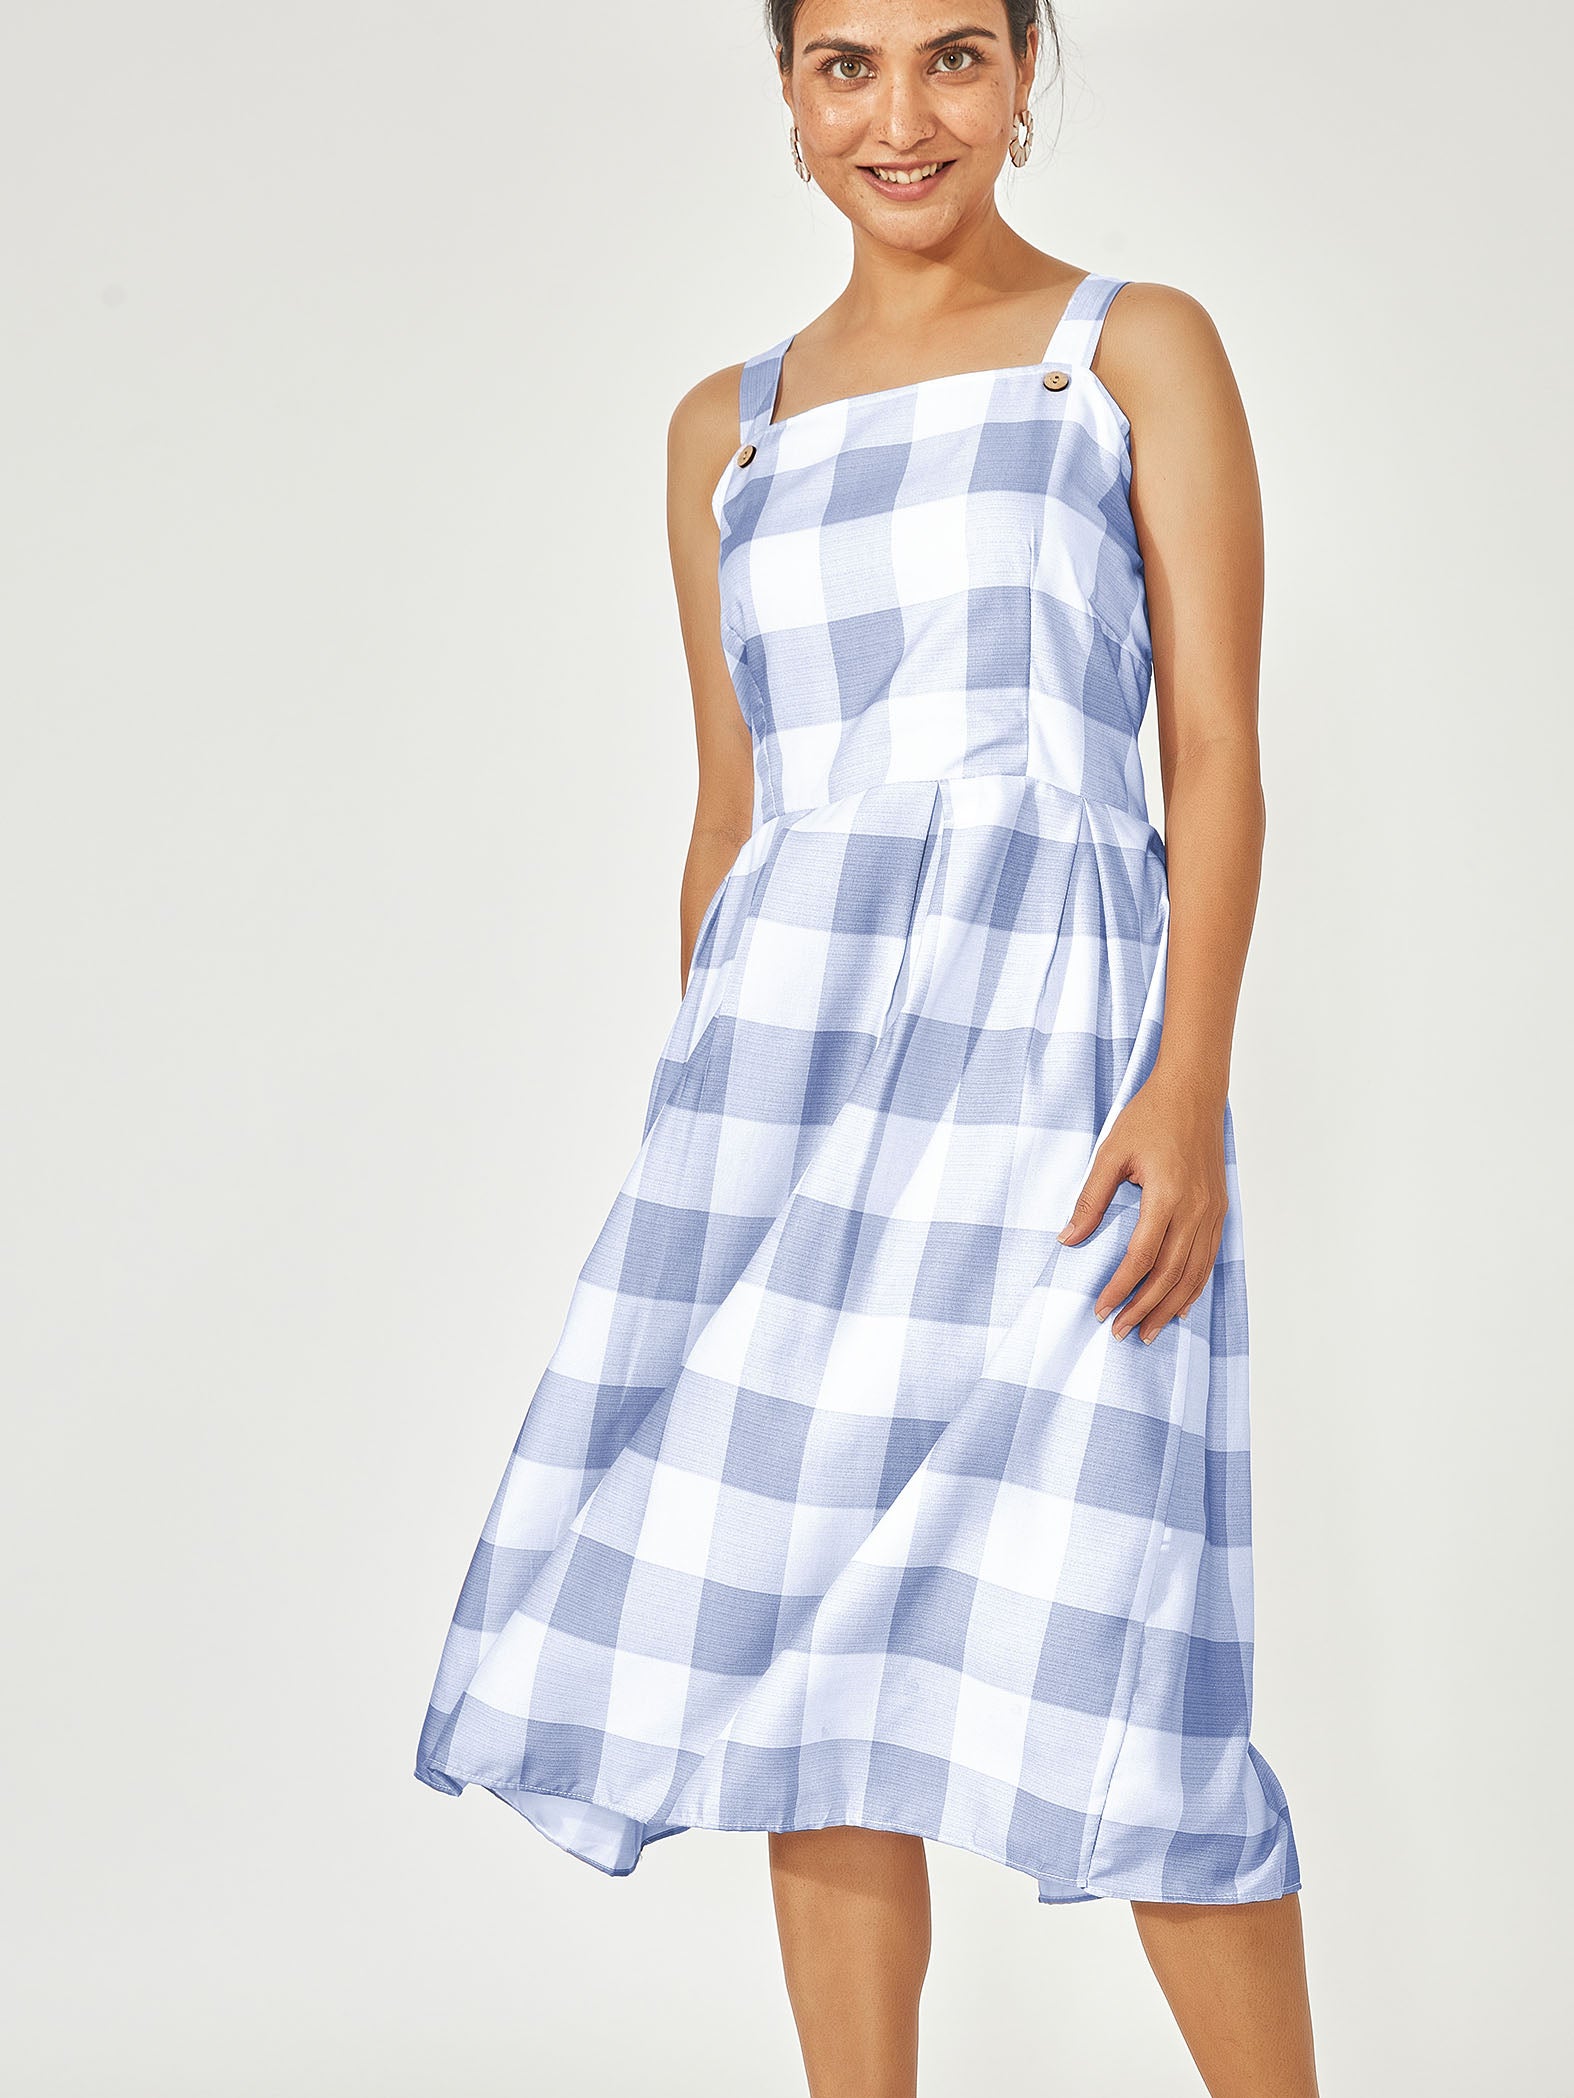 White & Spruce Blue Checks Dress